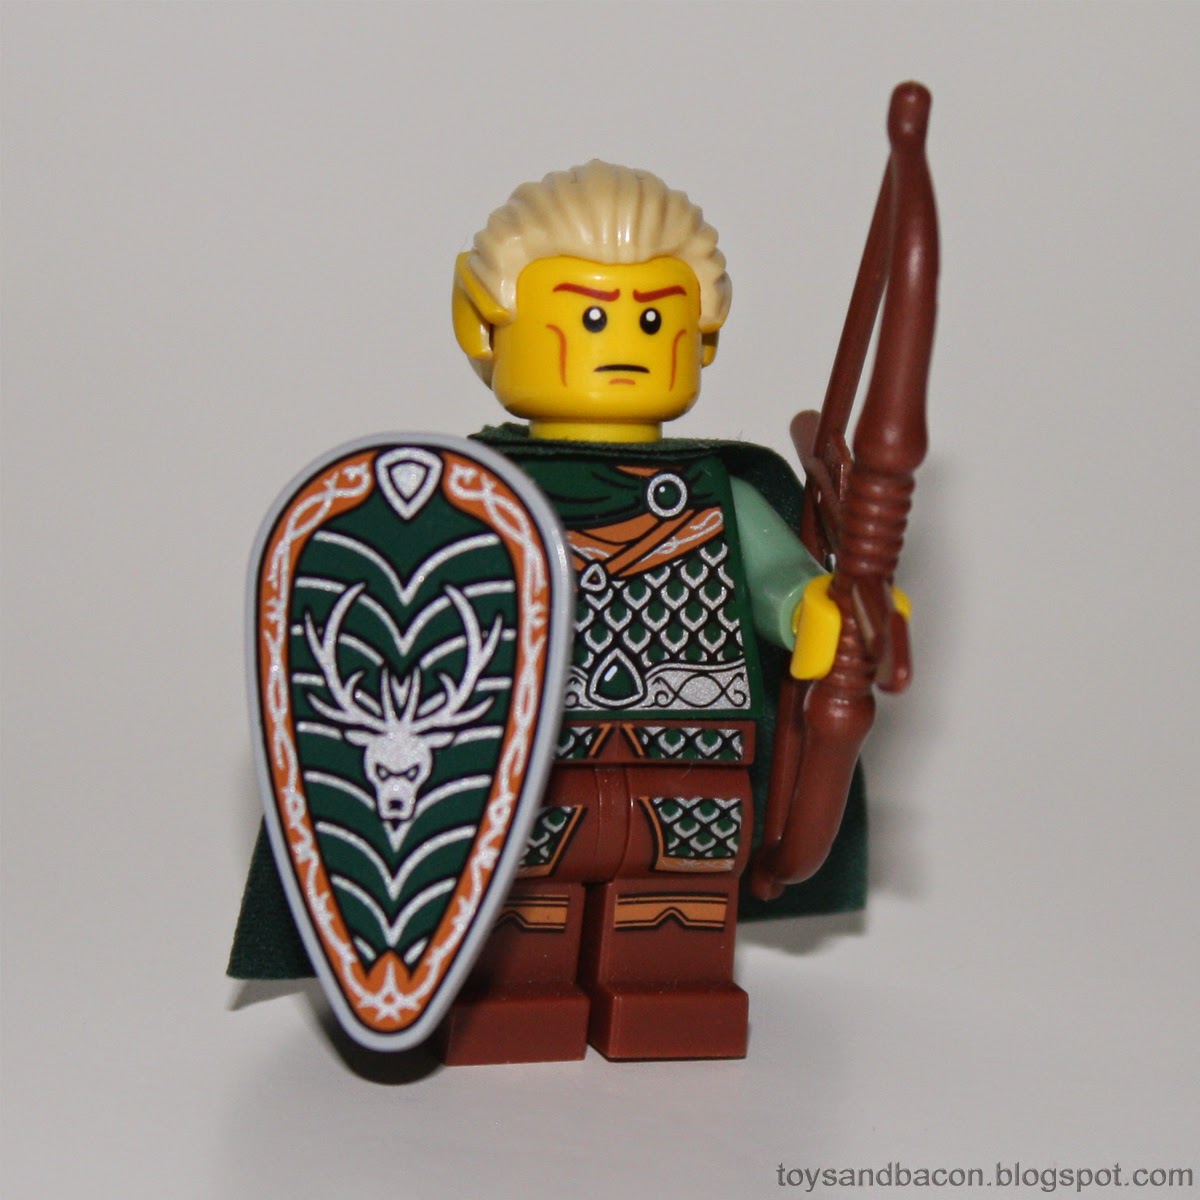 Before we had Lego Legolas, we had the Series 3 Elven Warrior. 